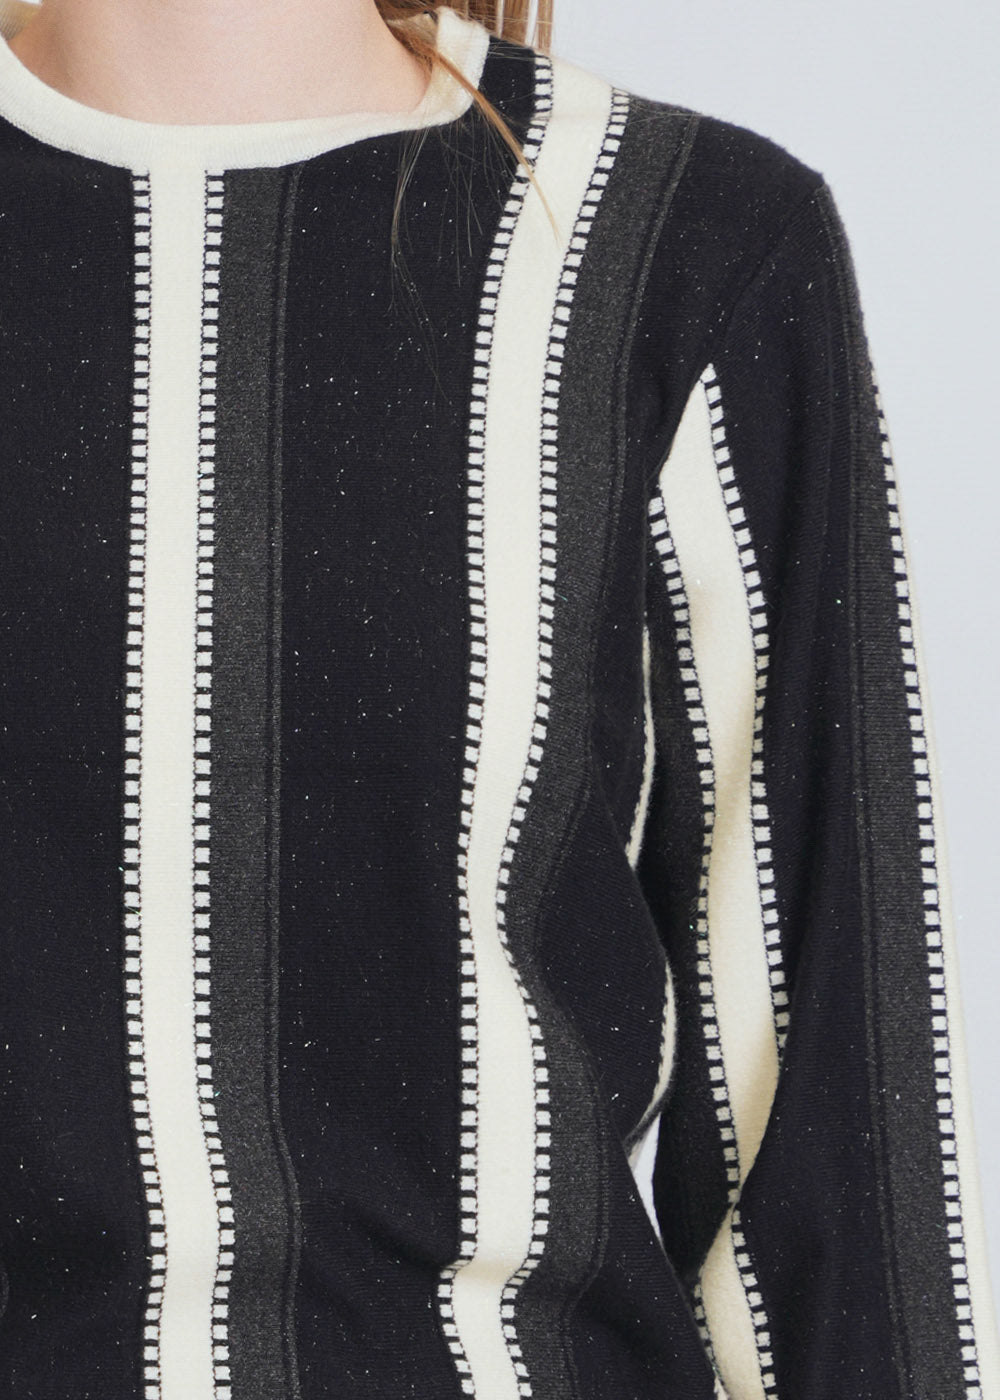 Black Contrast Knit Top